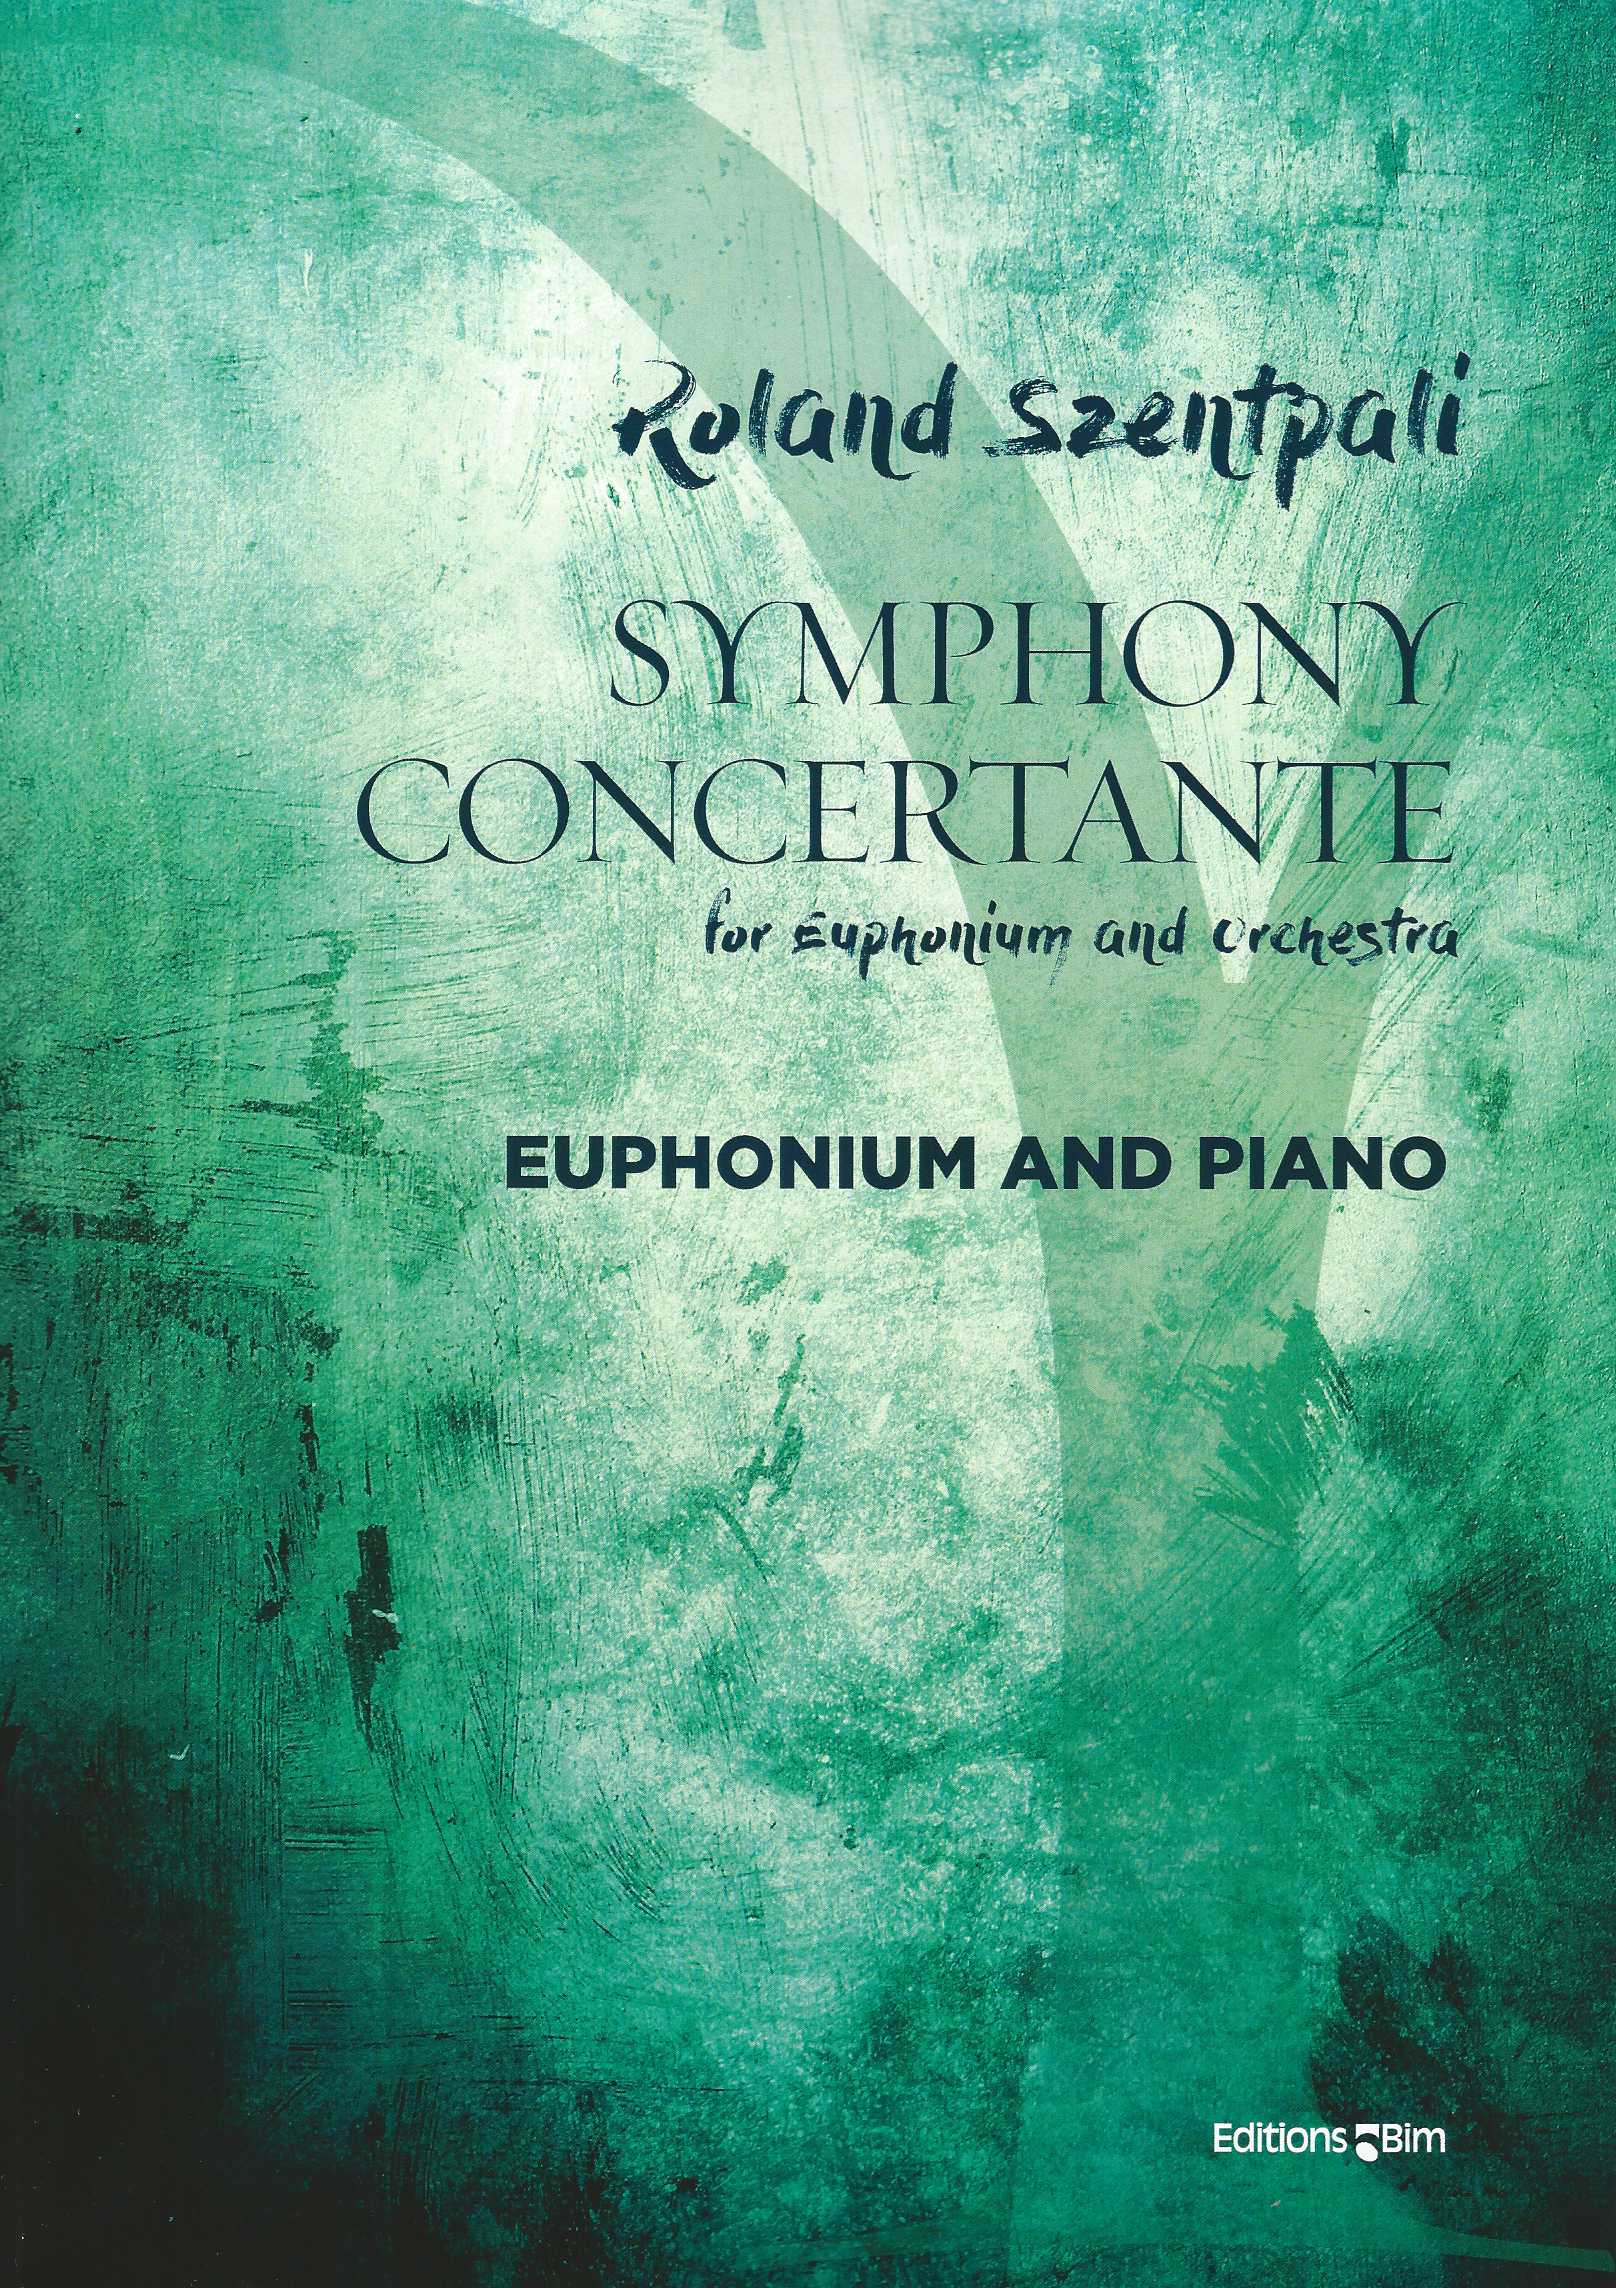 Symphony Concertante - Roland Szentpali - Euphonium and Piano